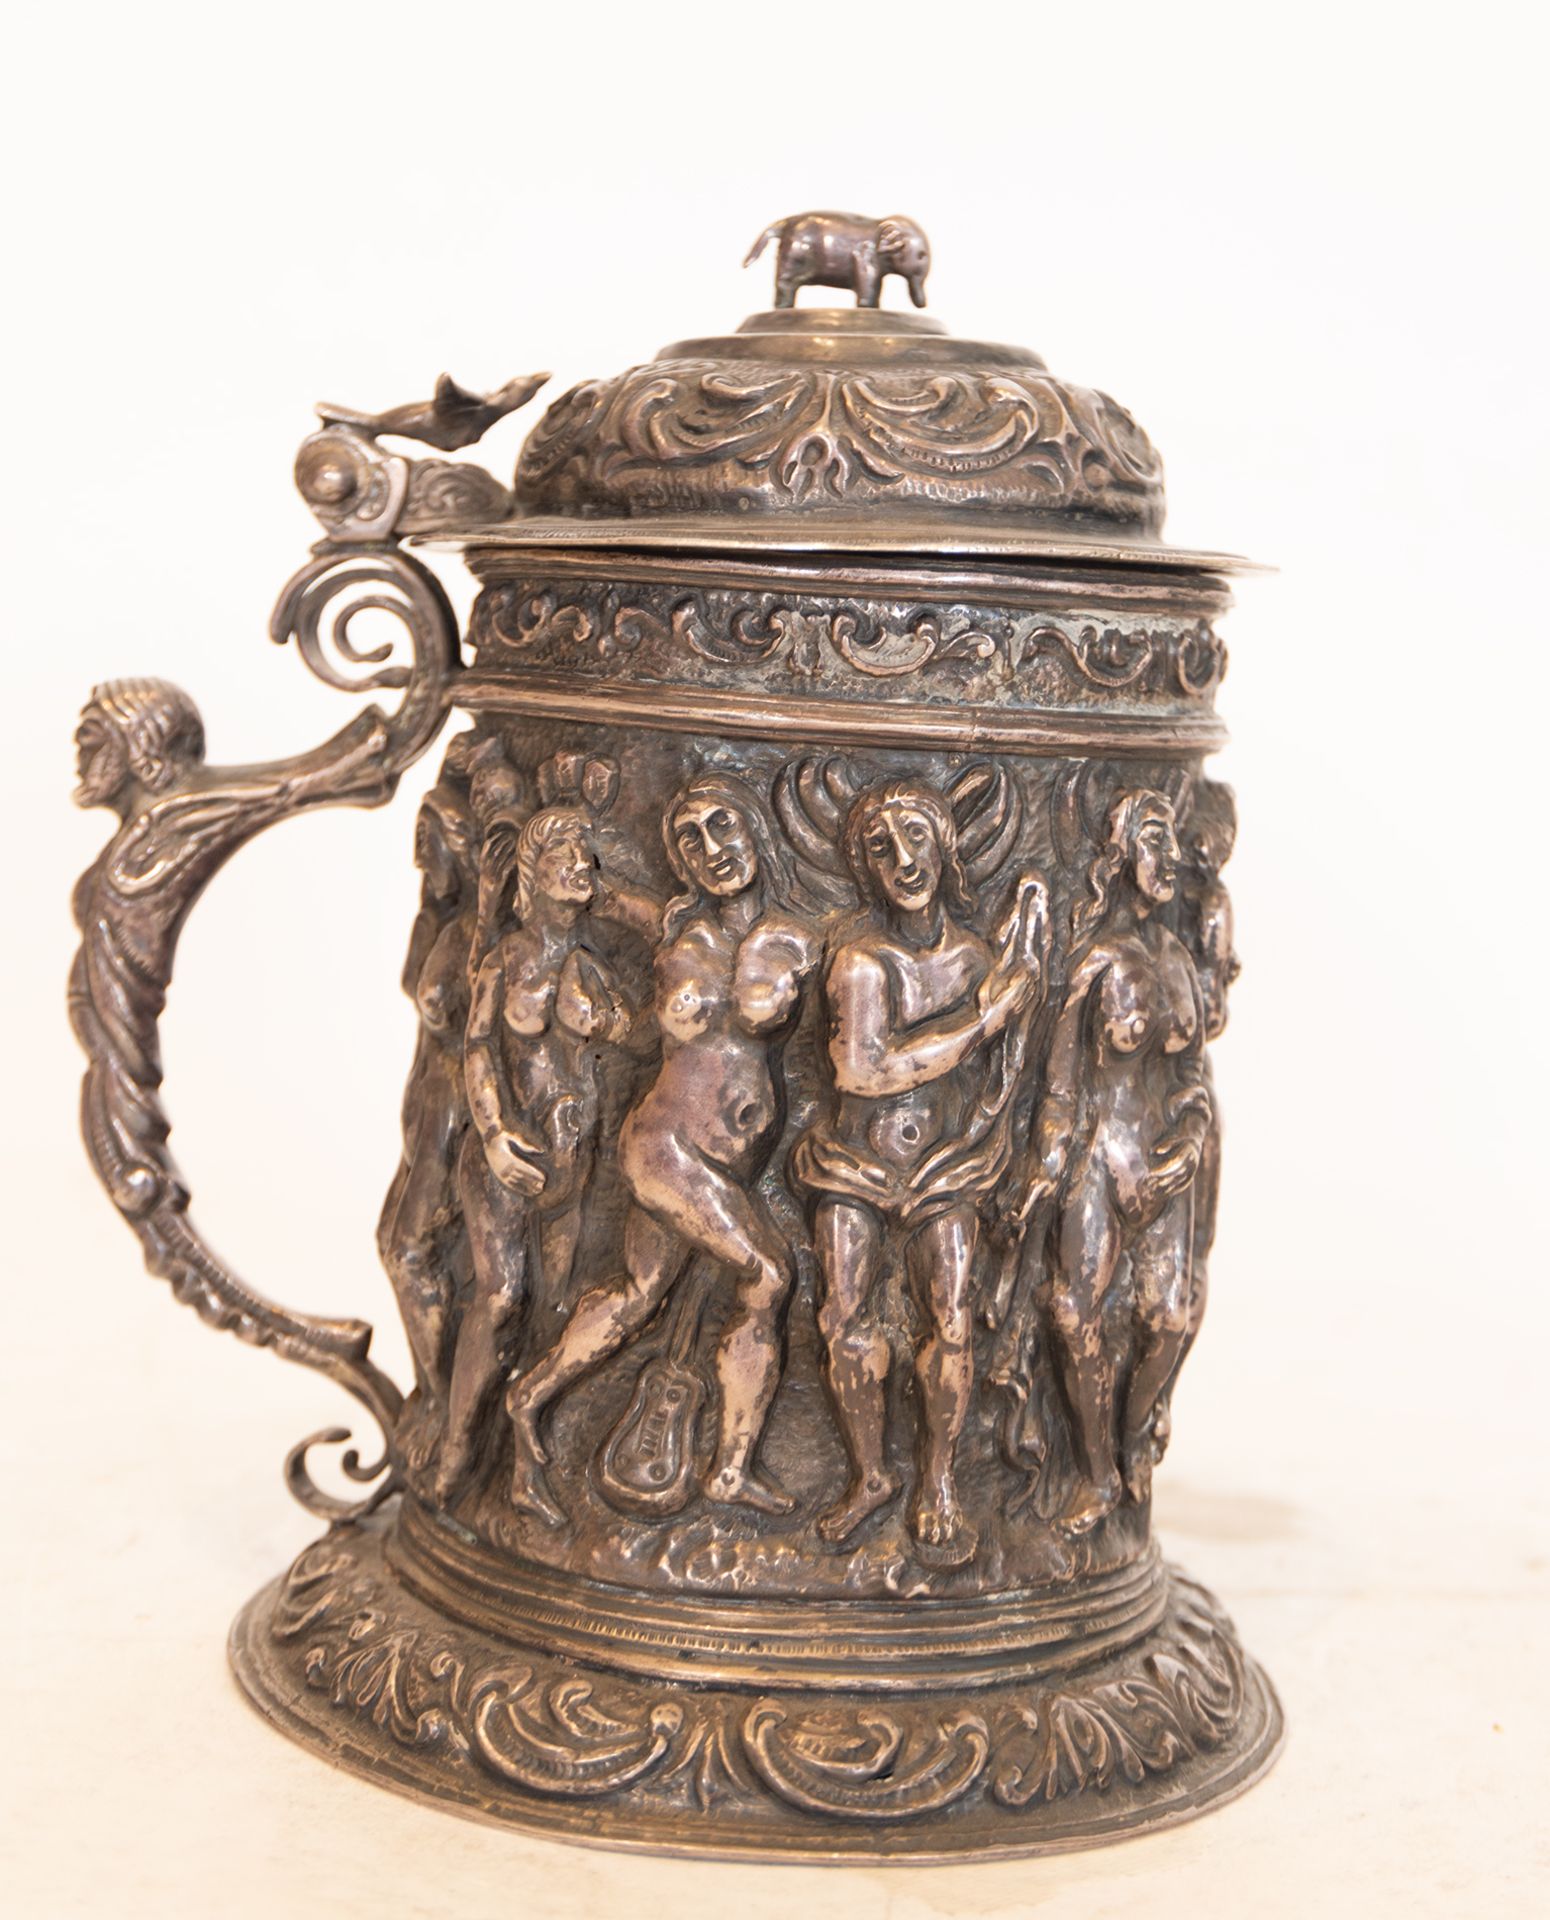 Tankard-type jug in Italian silver with Bacchanalian motifs, Italian school of the 18th - 19th centu - Image 3 of 5